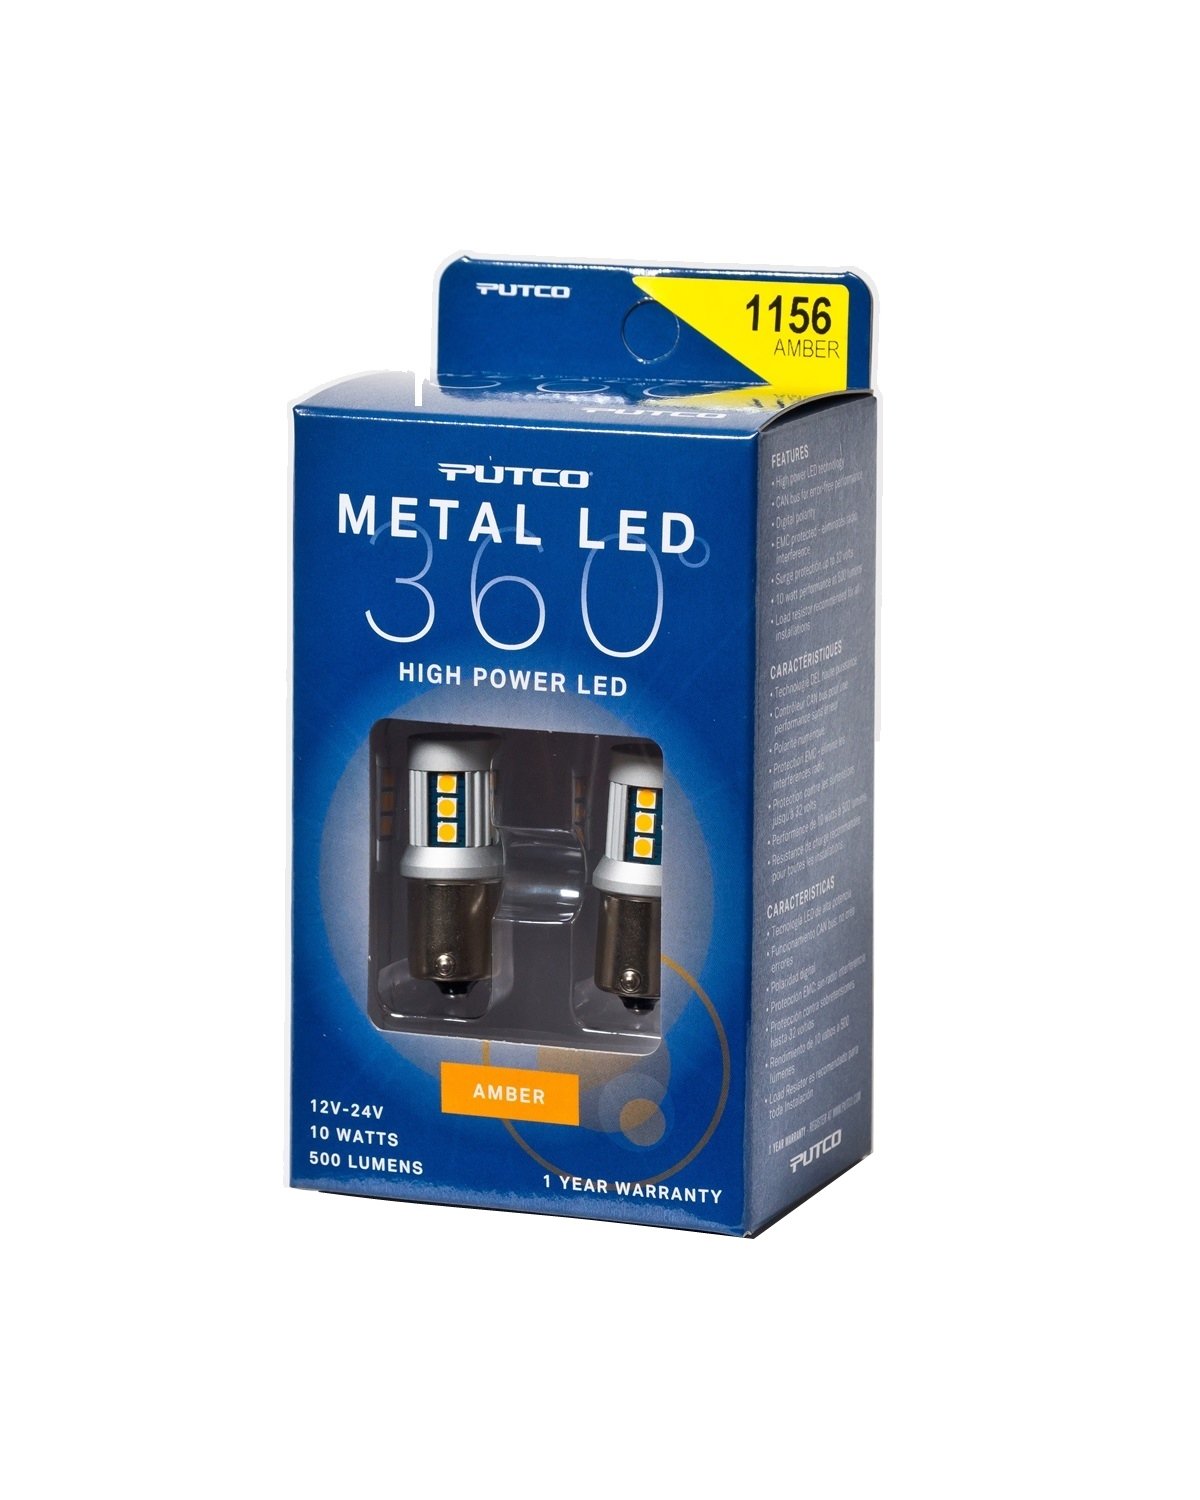 Putco 341156A-360 Metal LED Bulb, 1 Pack